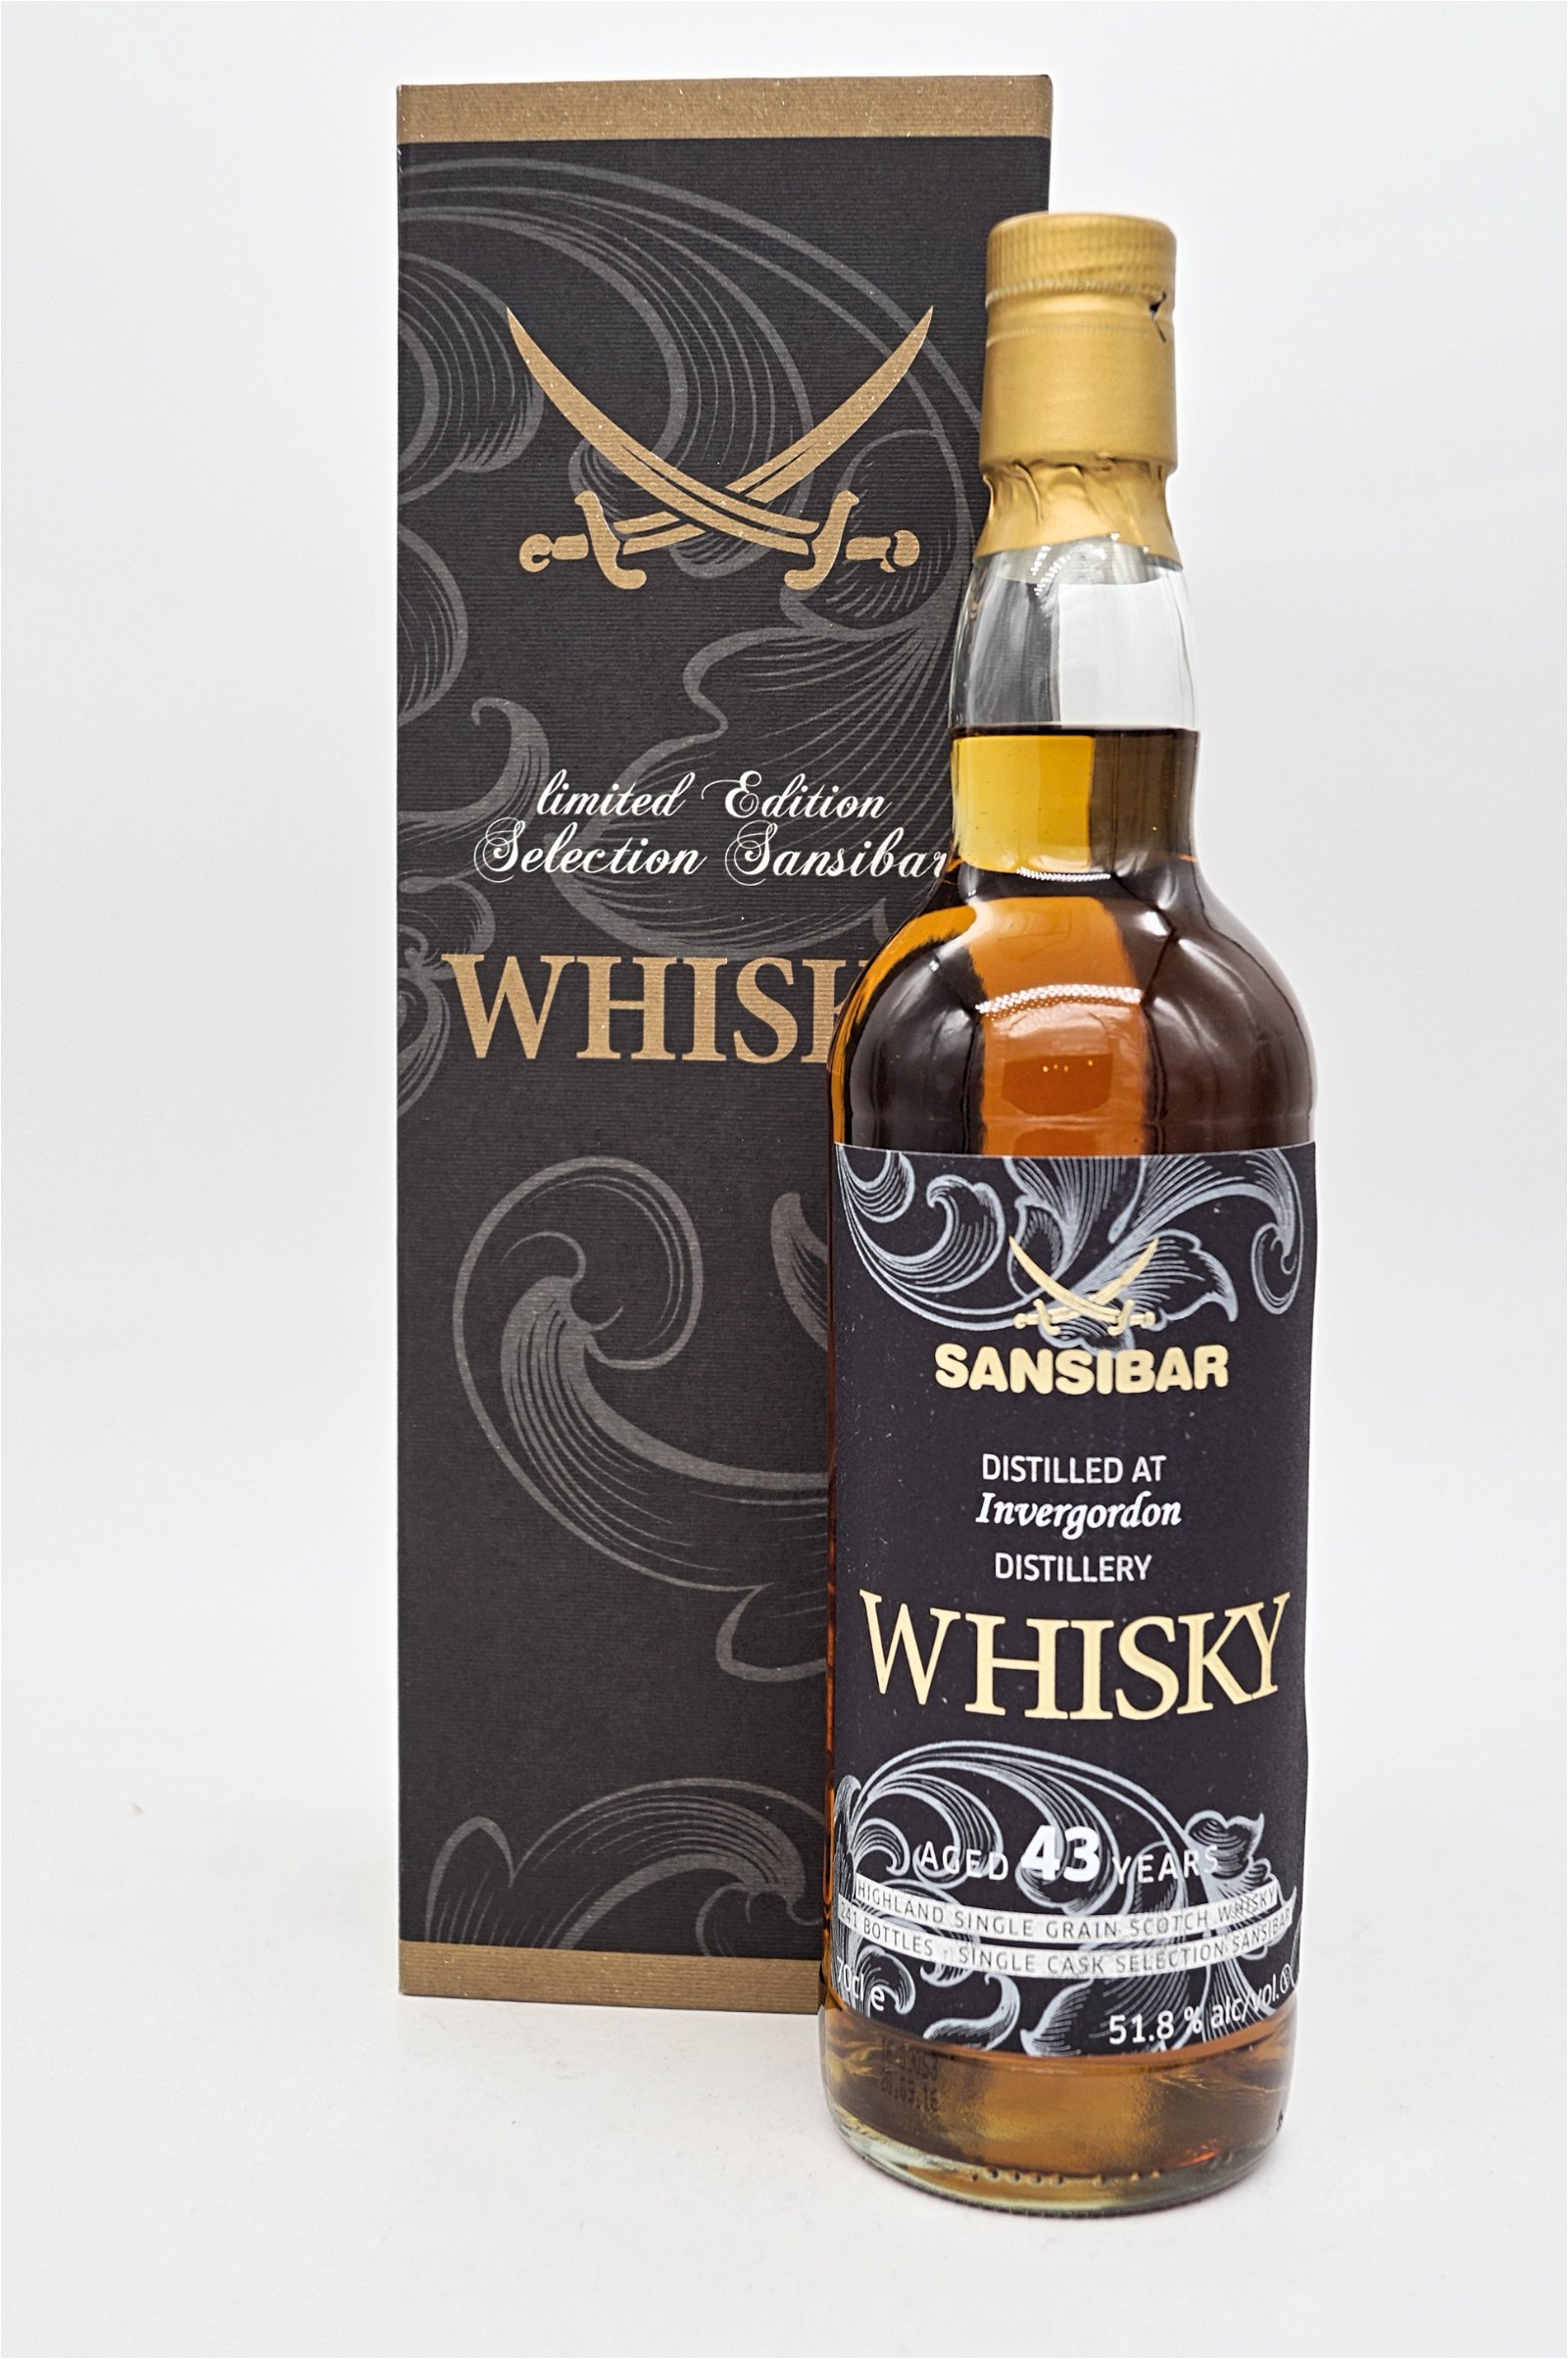 Sansibar Whisky 43 Jahre Invergordon Distillery 1973/2016 Limited Edition Single Cask Single Malt Scotch Whisky